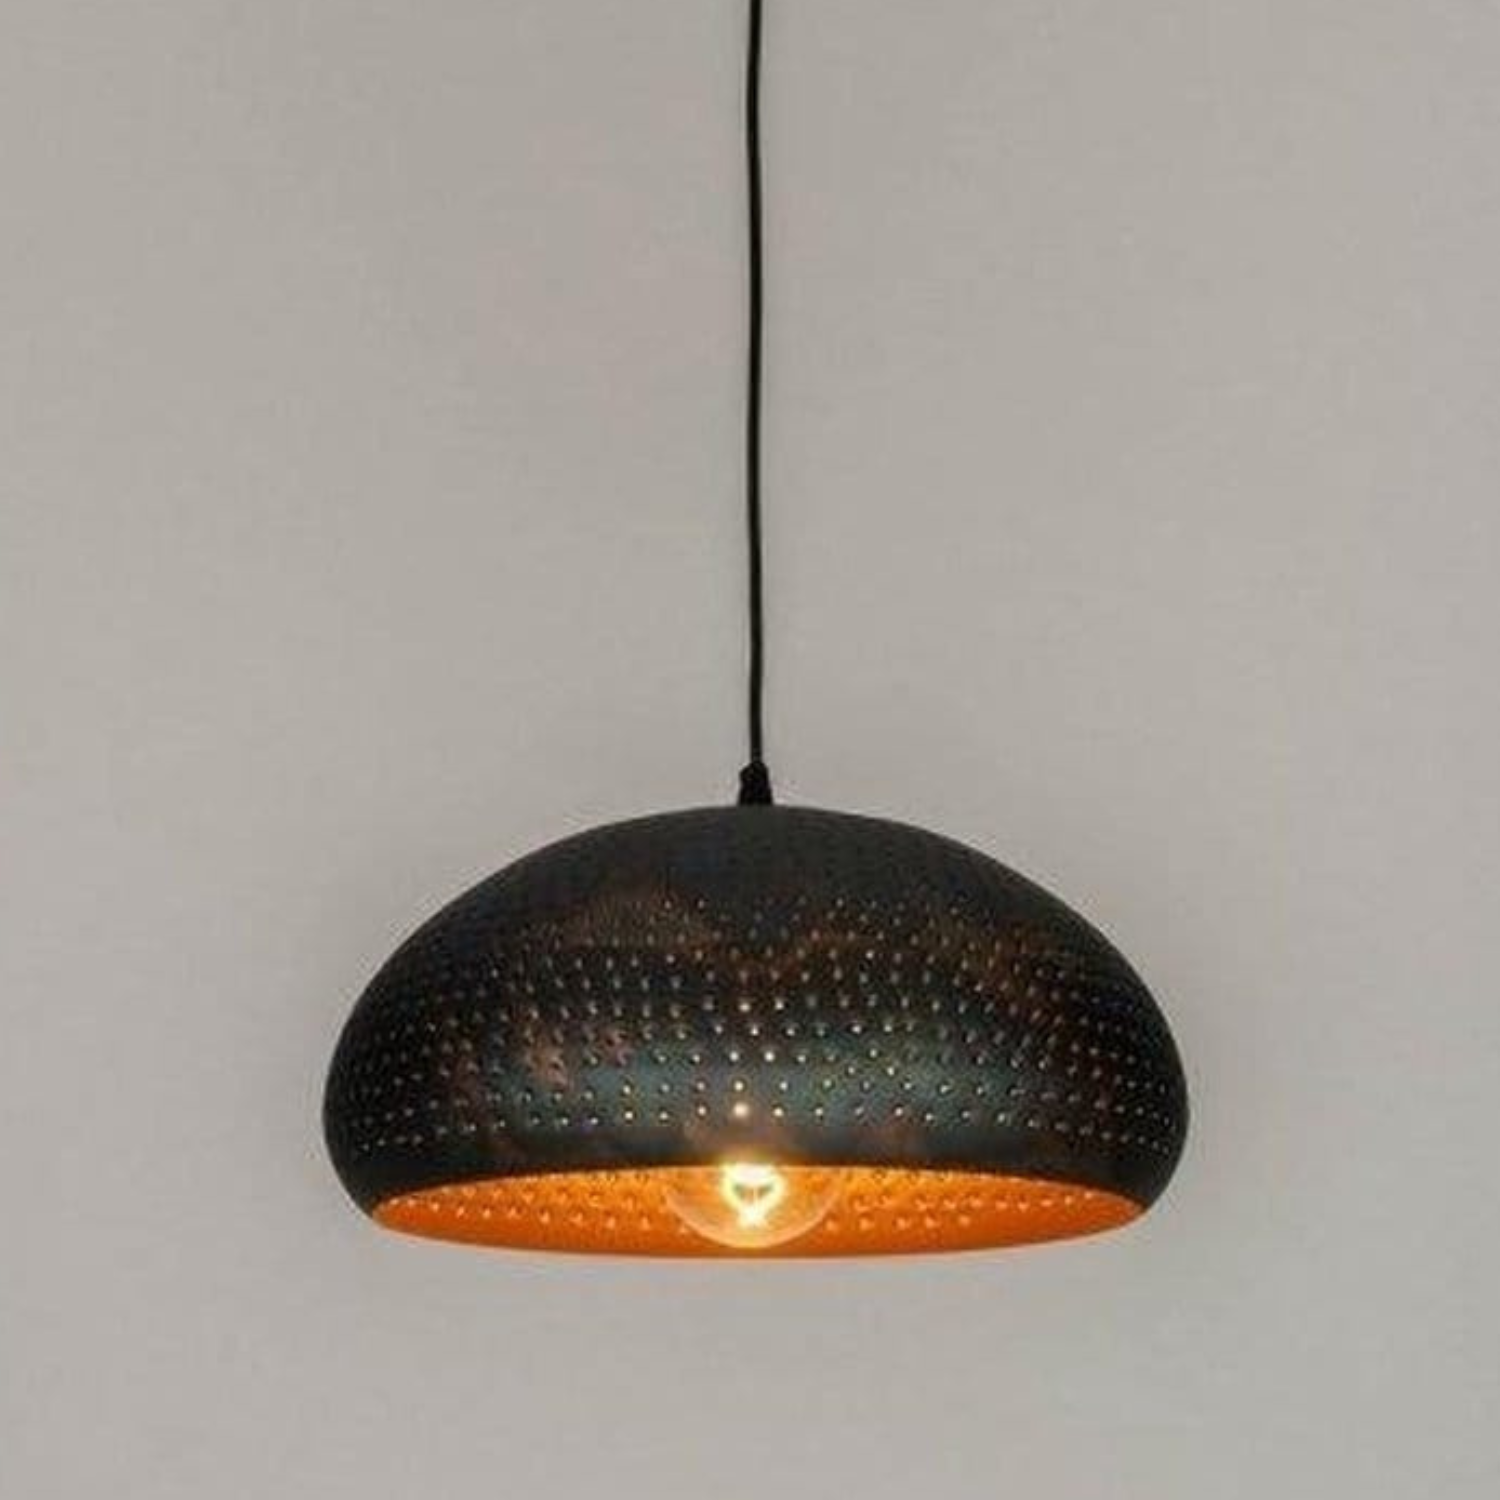 Industrial Black Suspension Lamp - Atmospheric Effect - Warm Golden Interior - LED Compatible